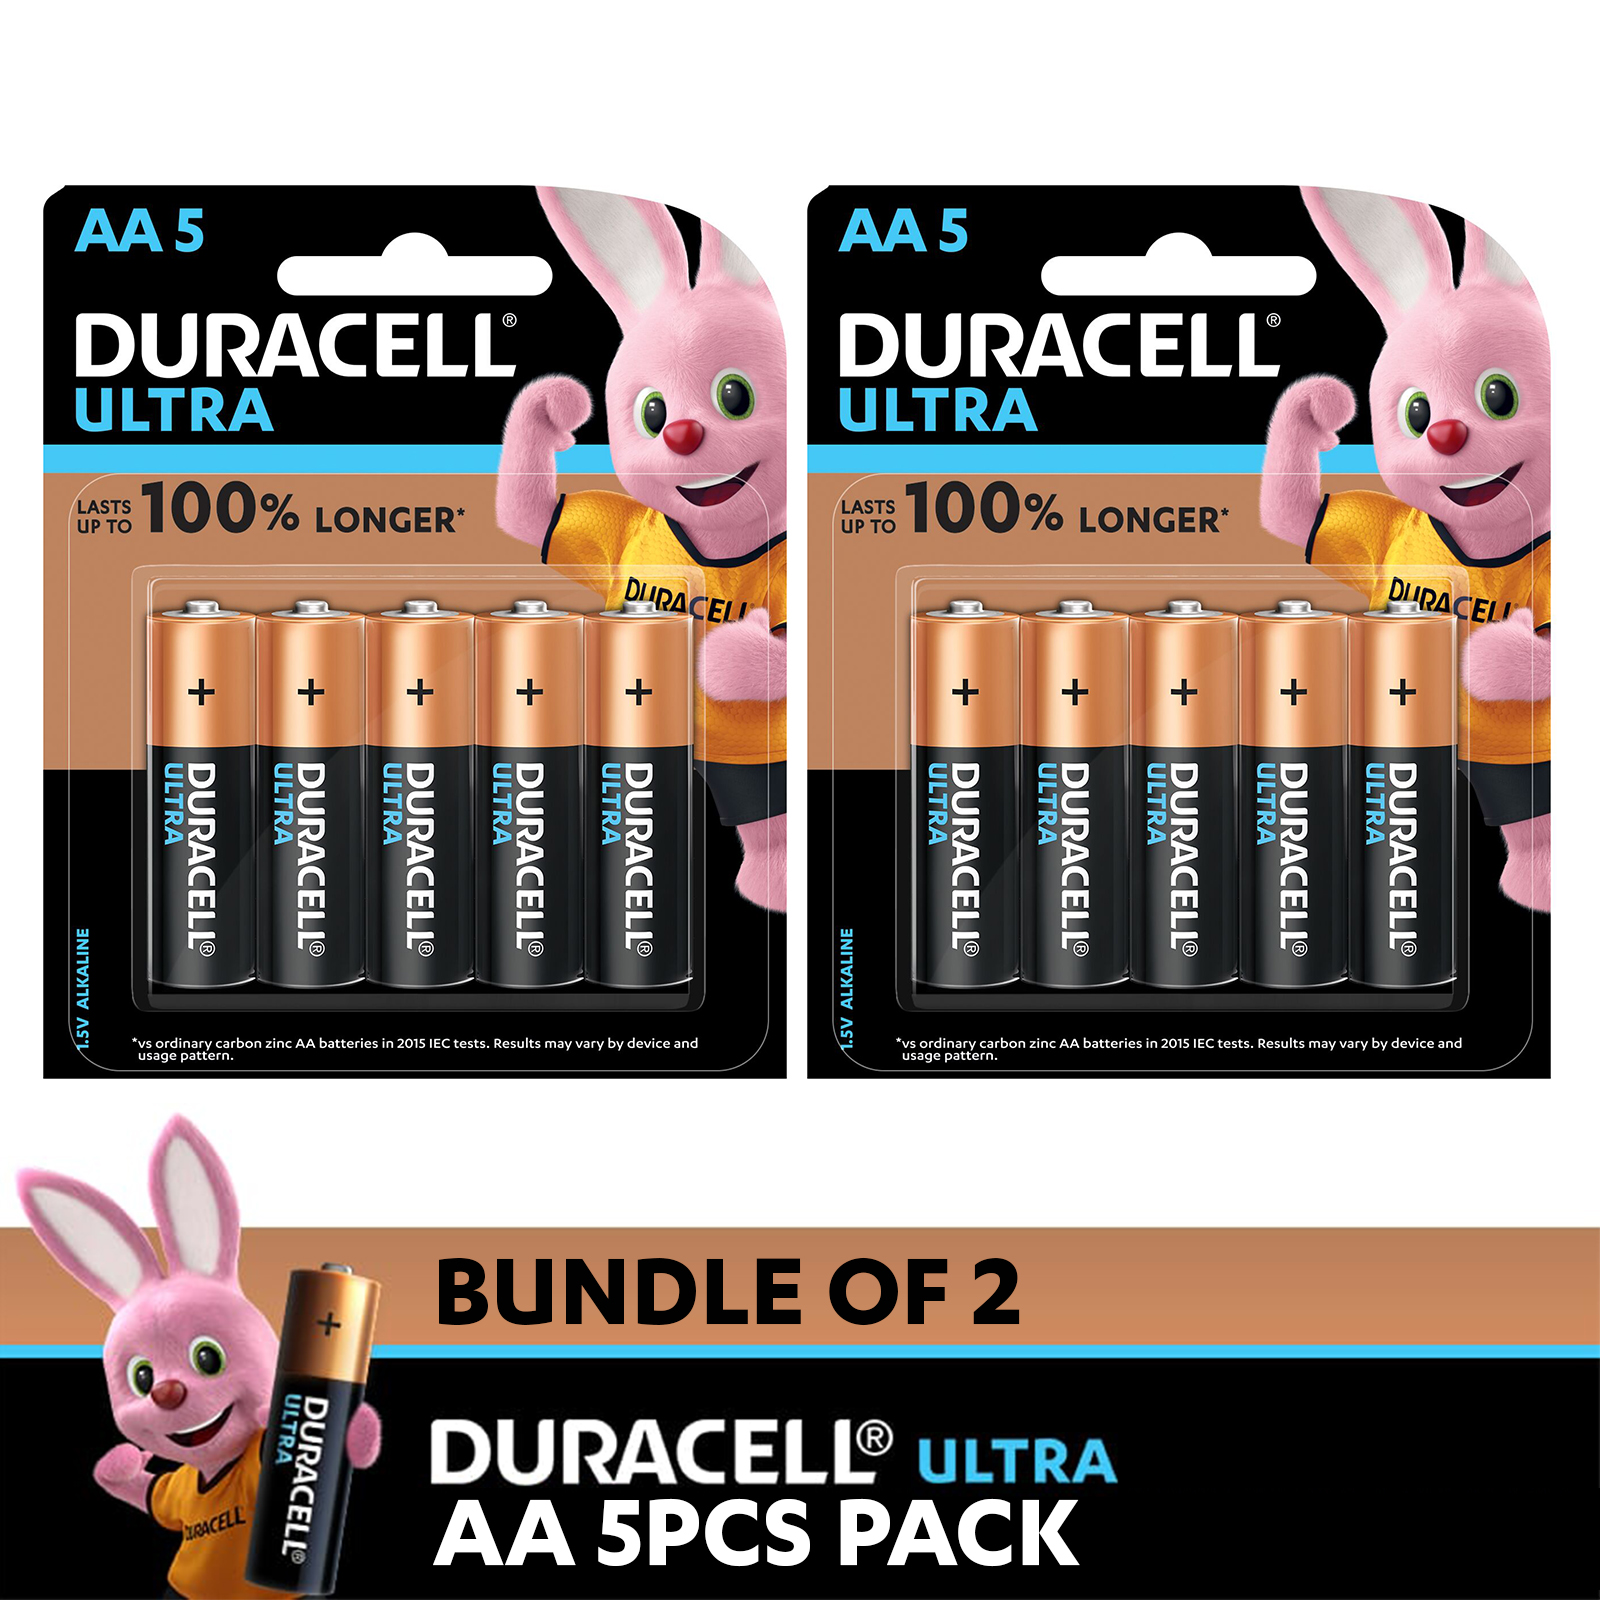 Bundle of 2] Duracell Ultra Alkaline AA Batteries, pack of 5